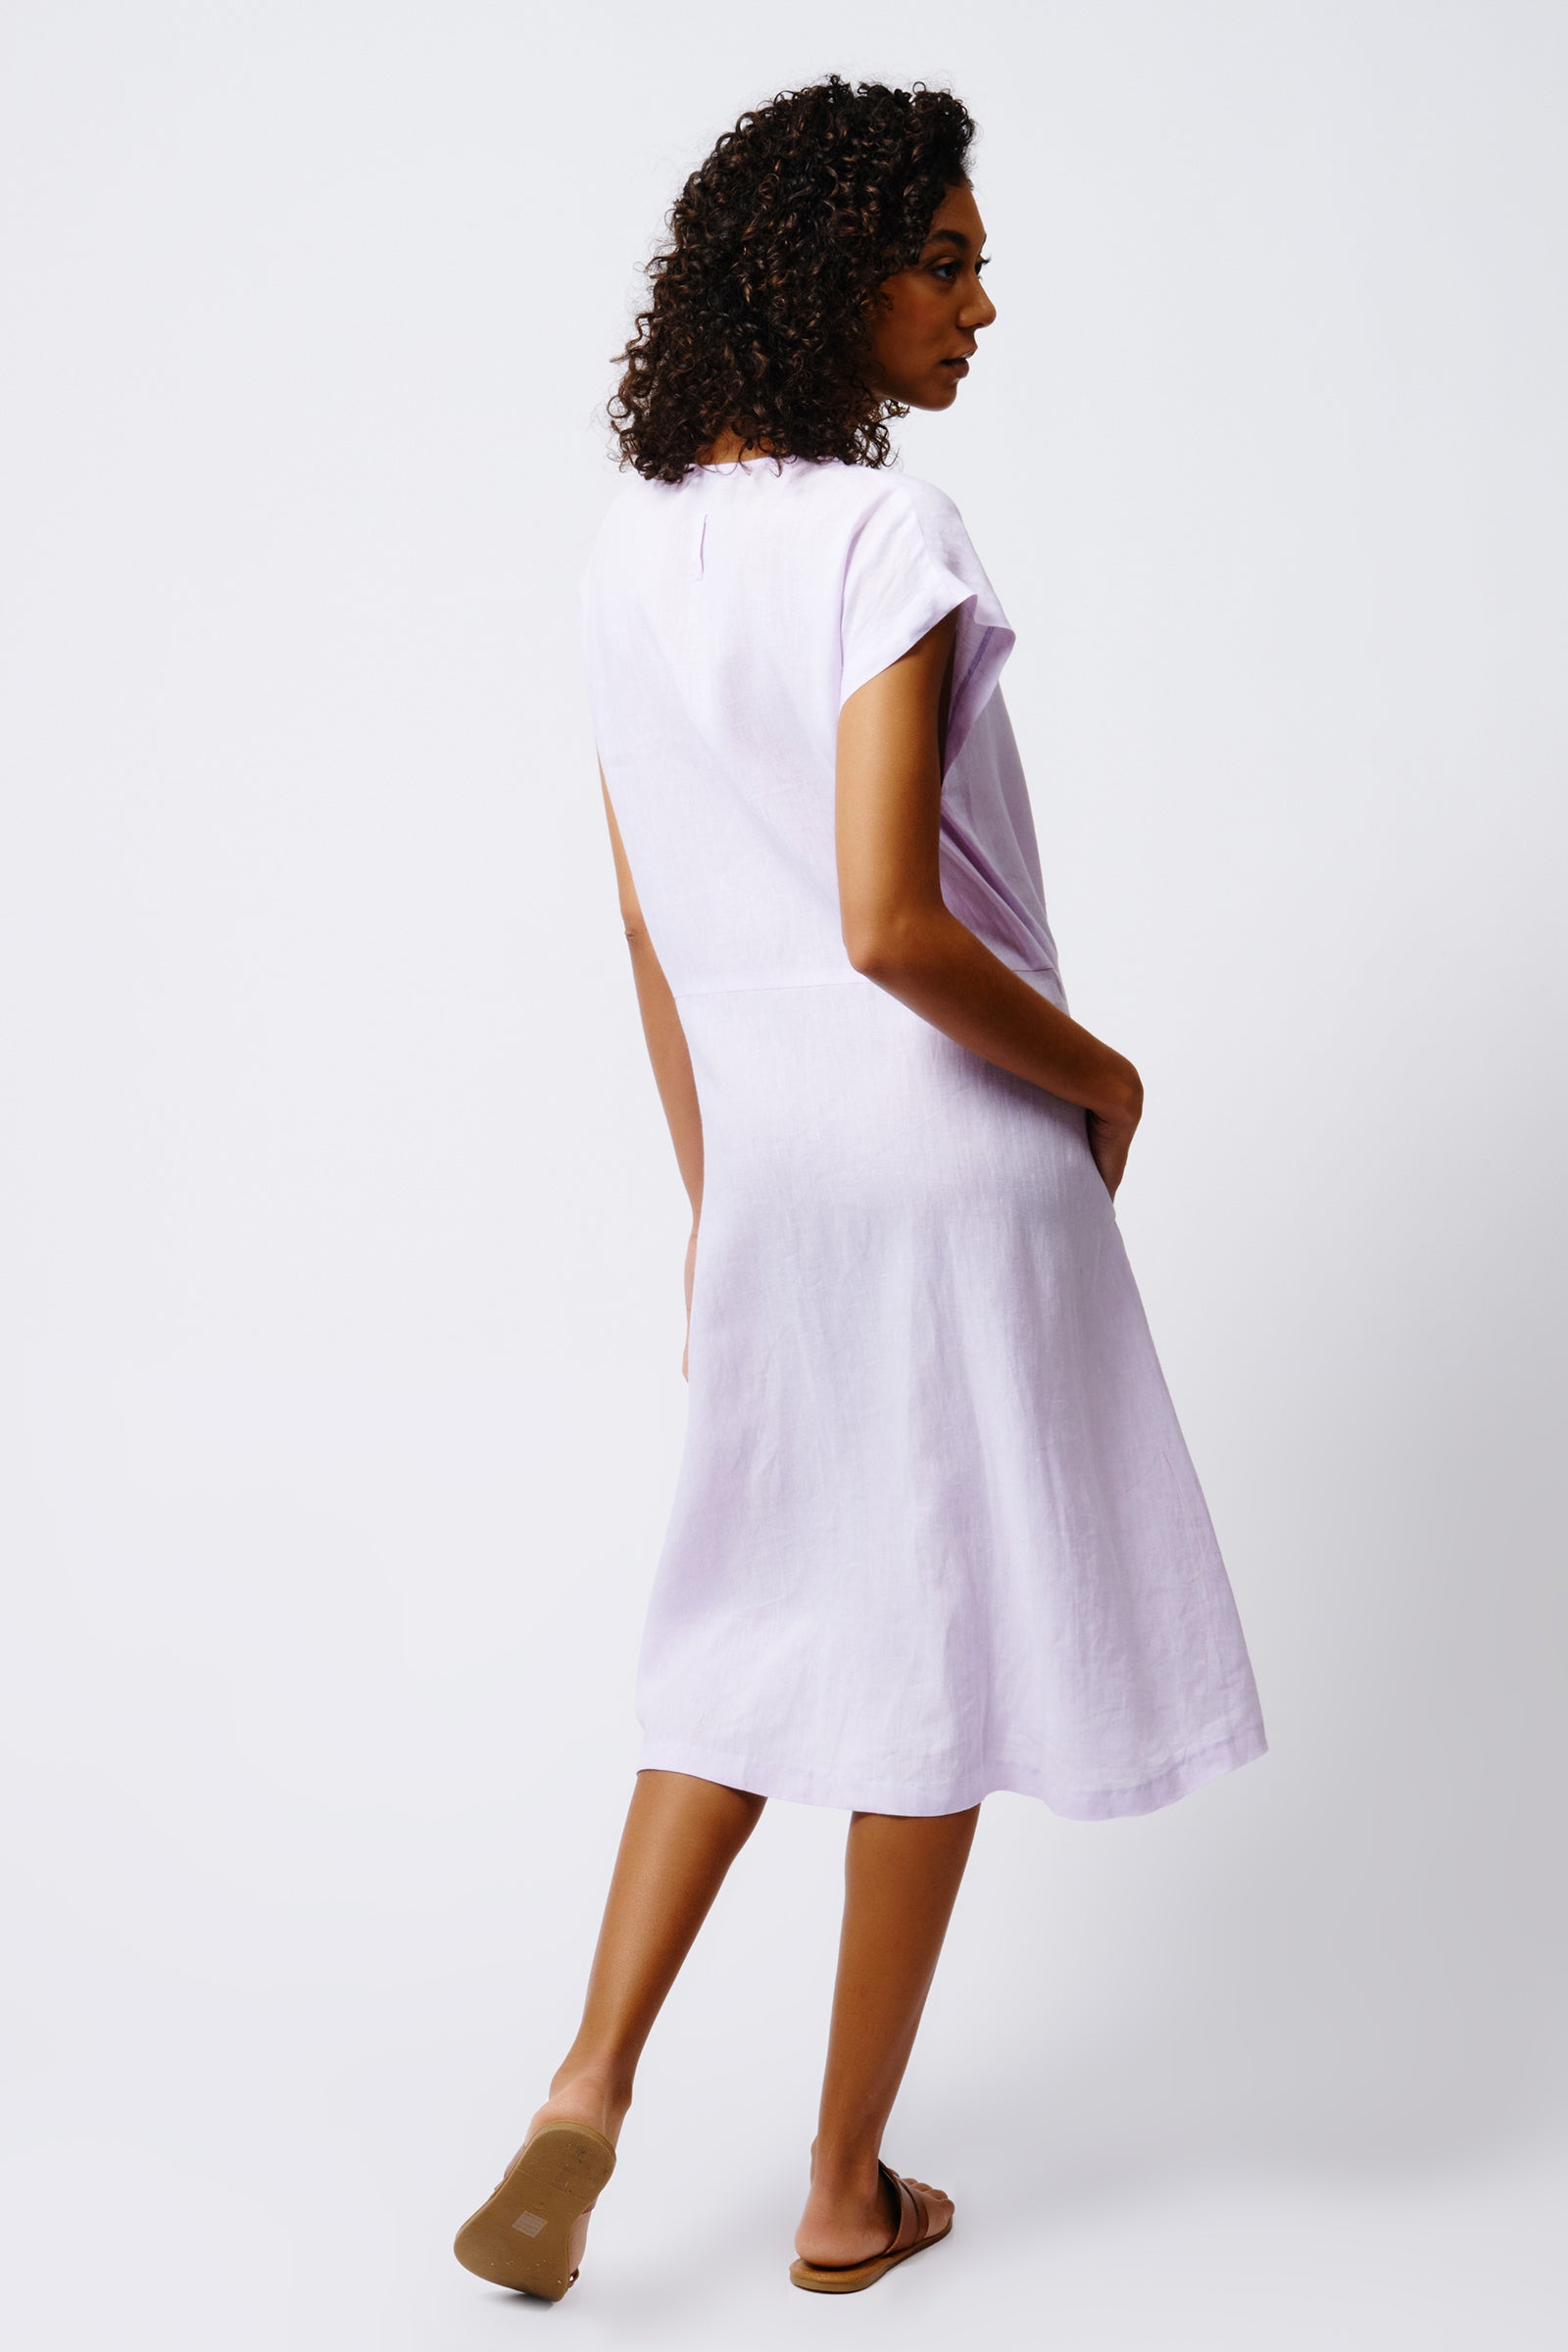 Kal Rieman Harlow Cap Sleeve Dress in Lavender Linen on Model Full Back View